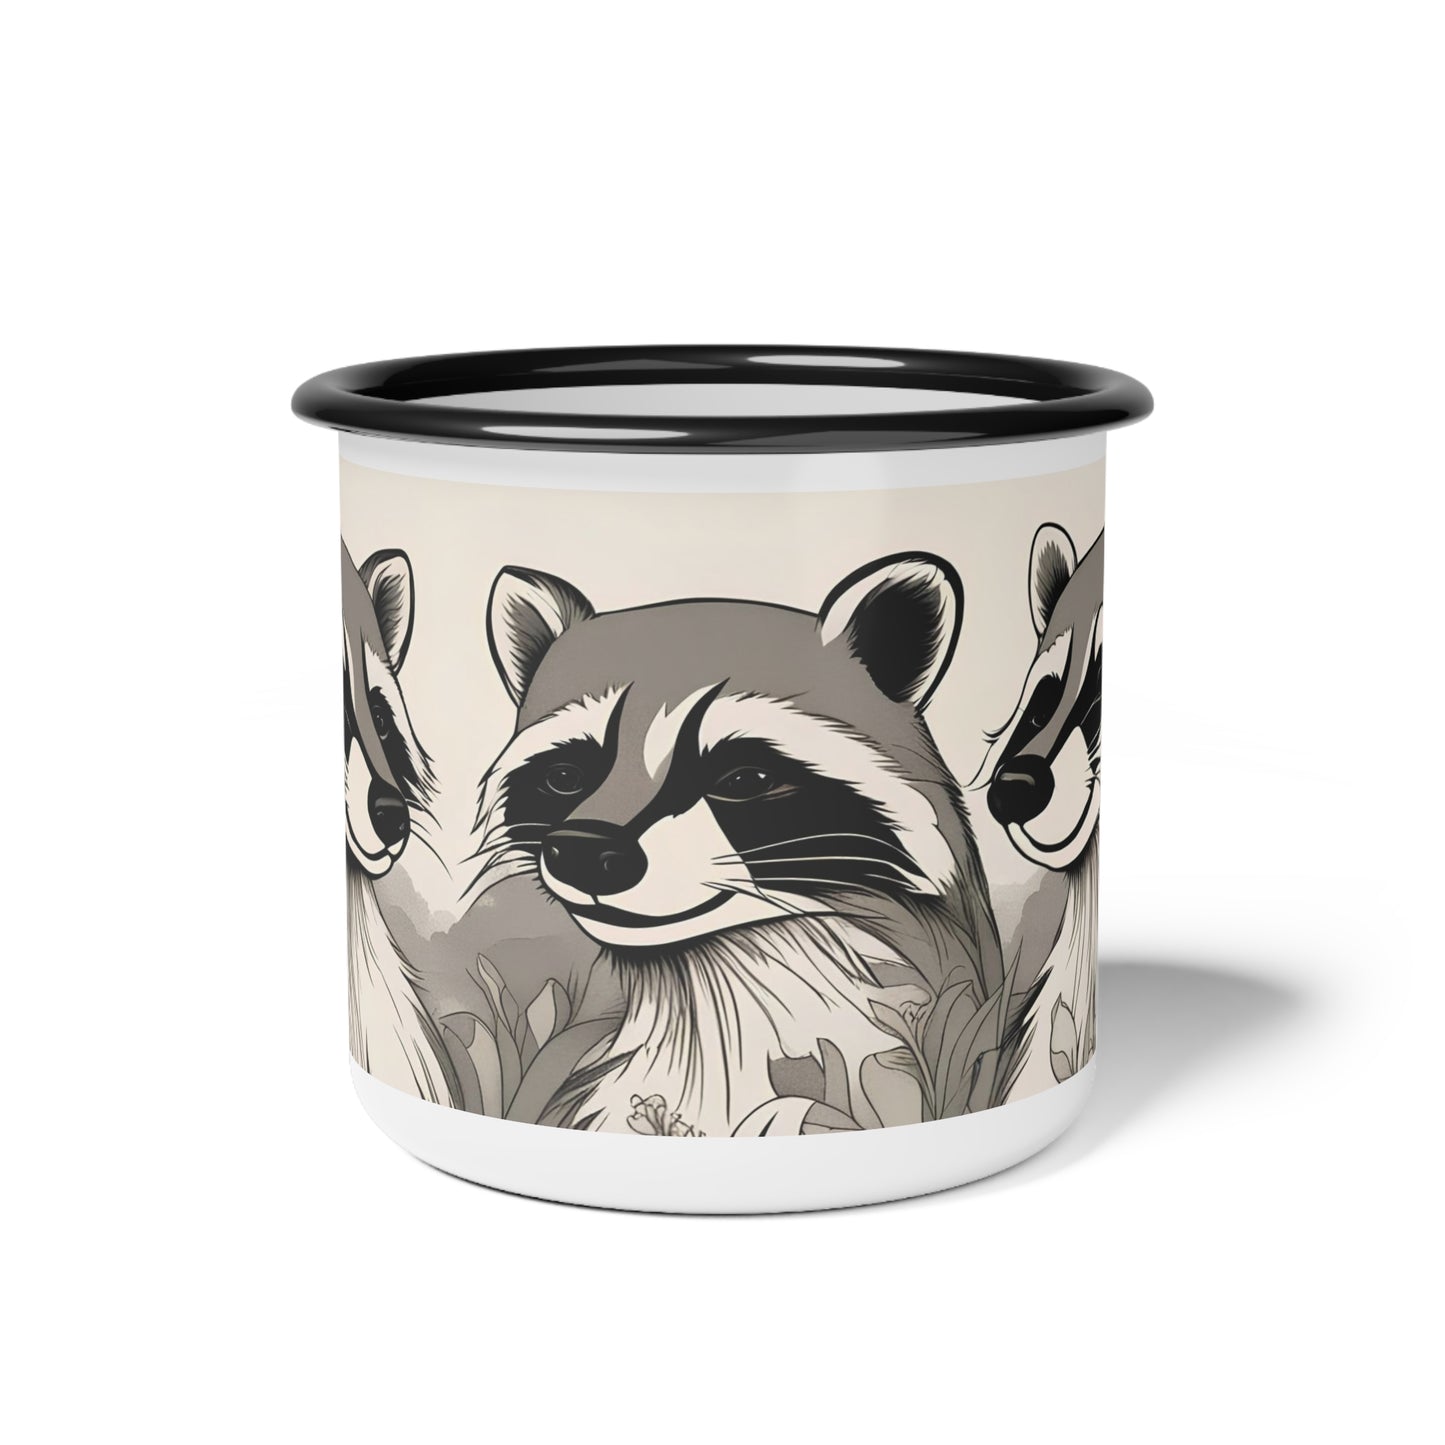 Three Raccoons, Enamel Camping Mug for Coffee, Tea, Cocoa, or Cereal - 12oz